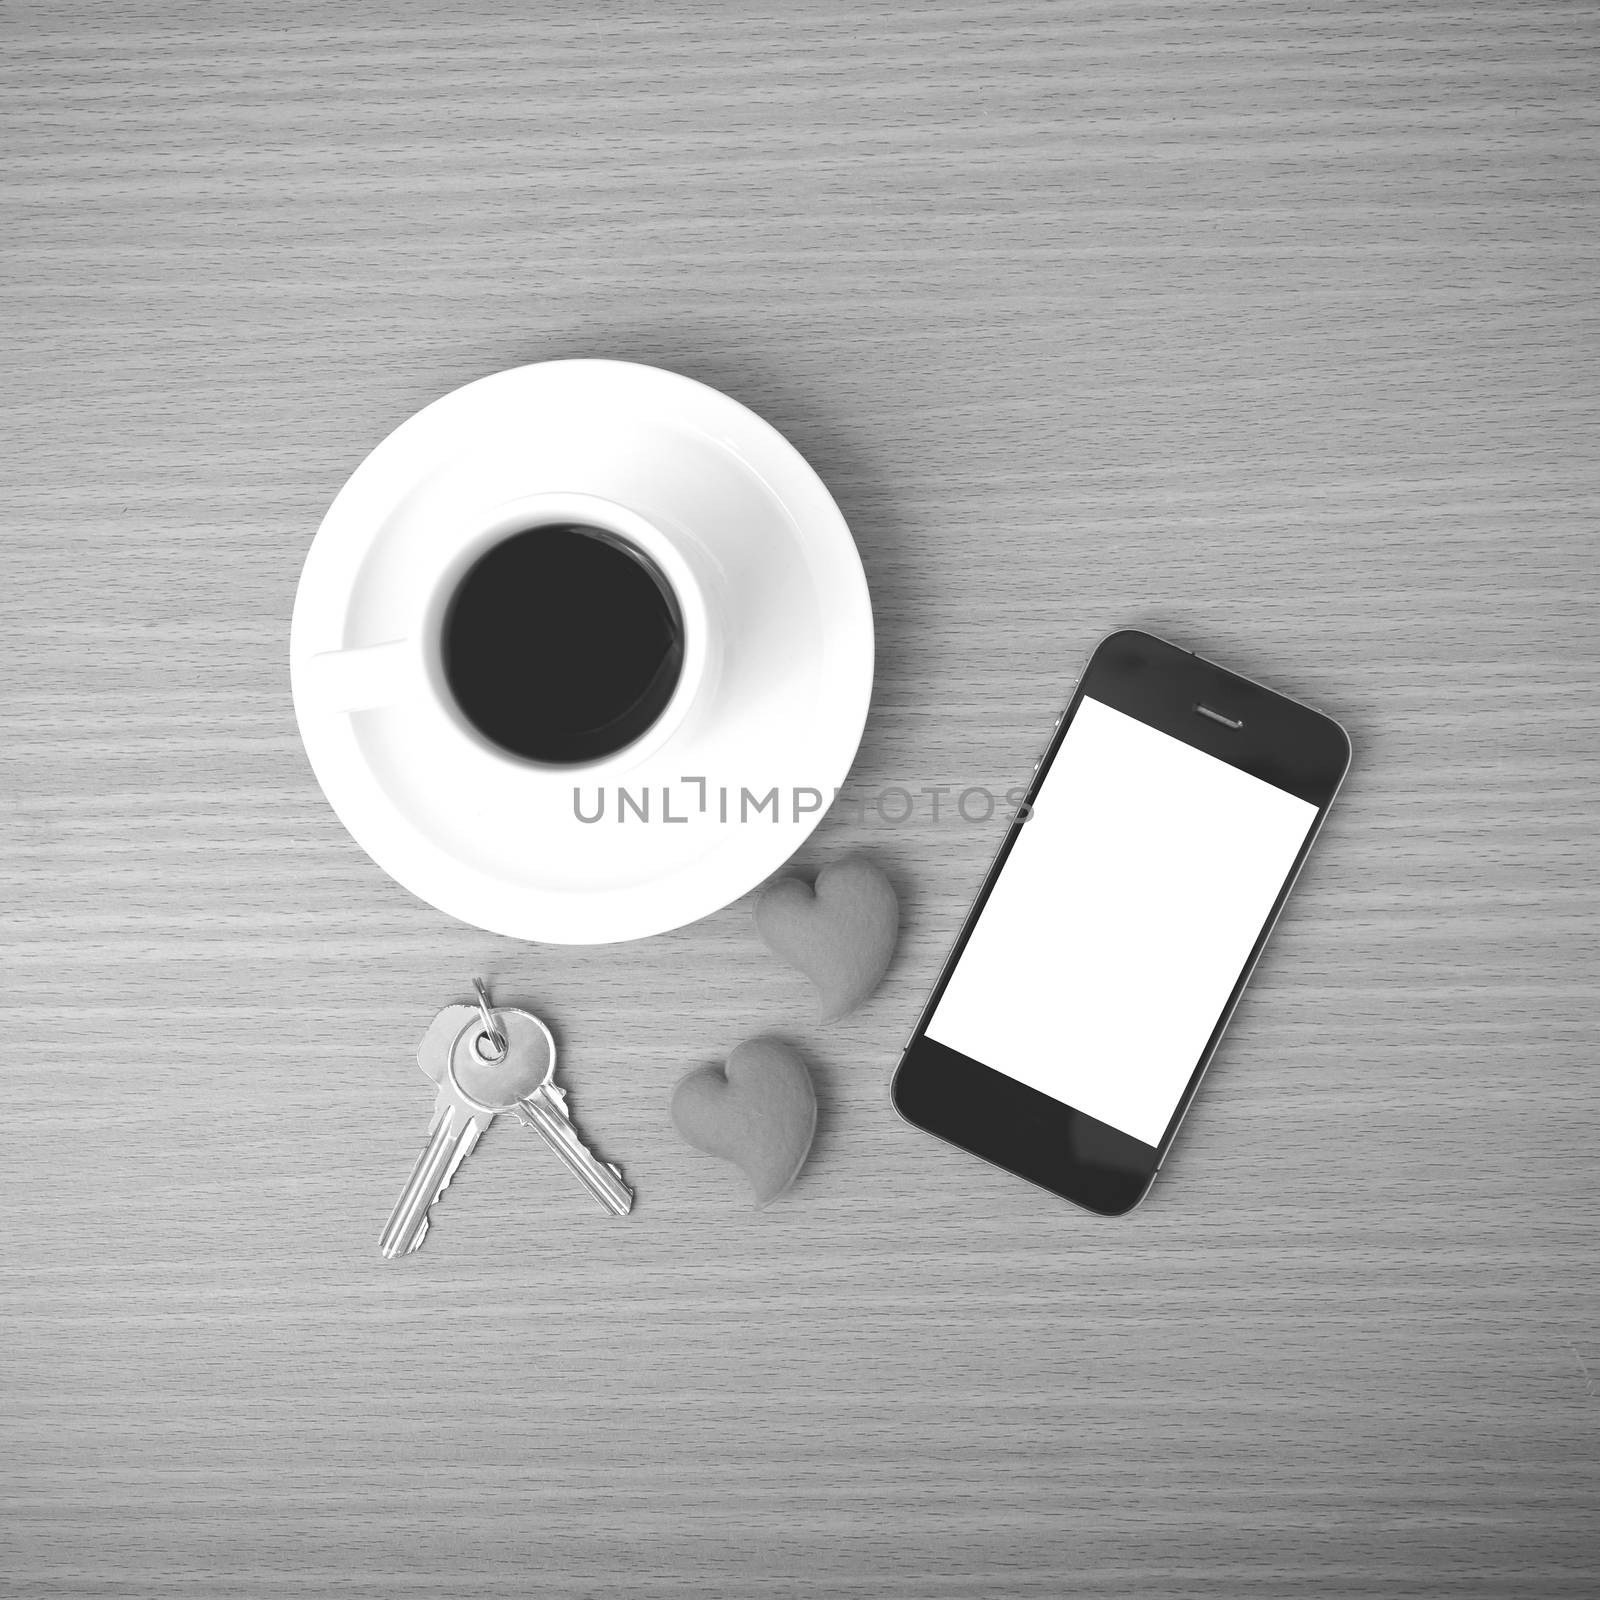 coffee phone key and heart by ammza12